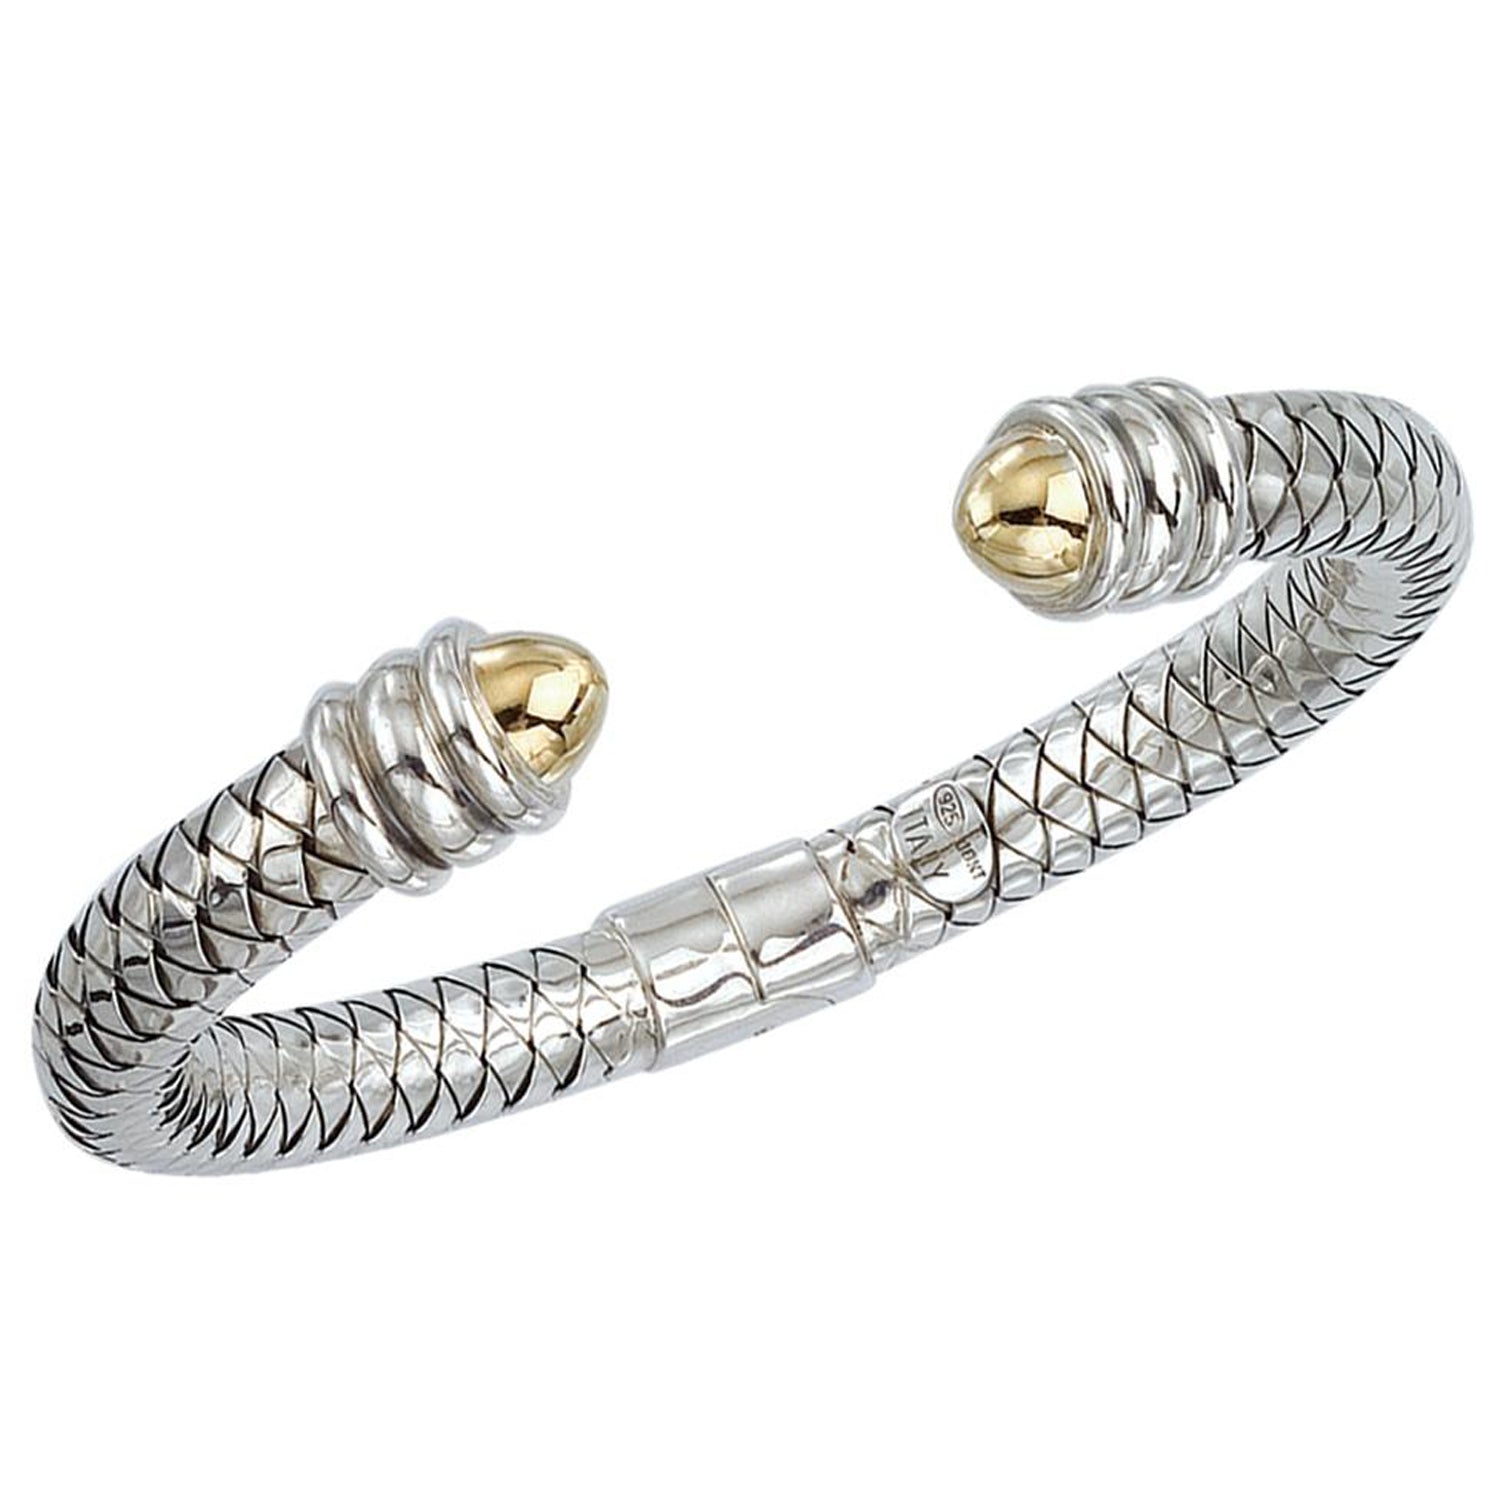 Buy Miabella 18K Gold Over Sterling Silver Italian 5mm Mesh Link Chain  Bracelet for Women 6.5, 7, 7.5, 8 Inch 925 (7.5) at Amazon.in